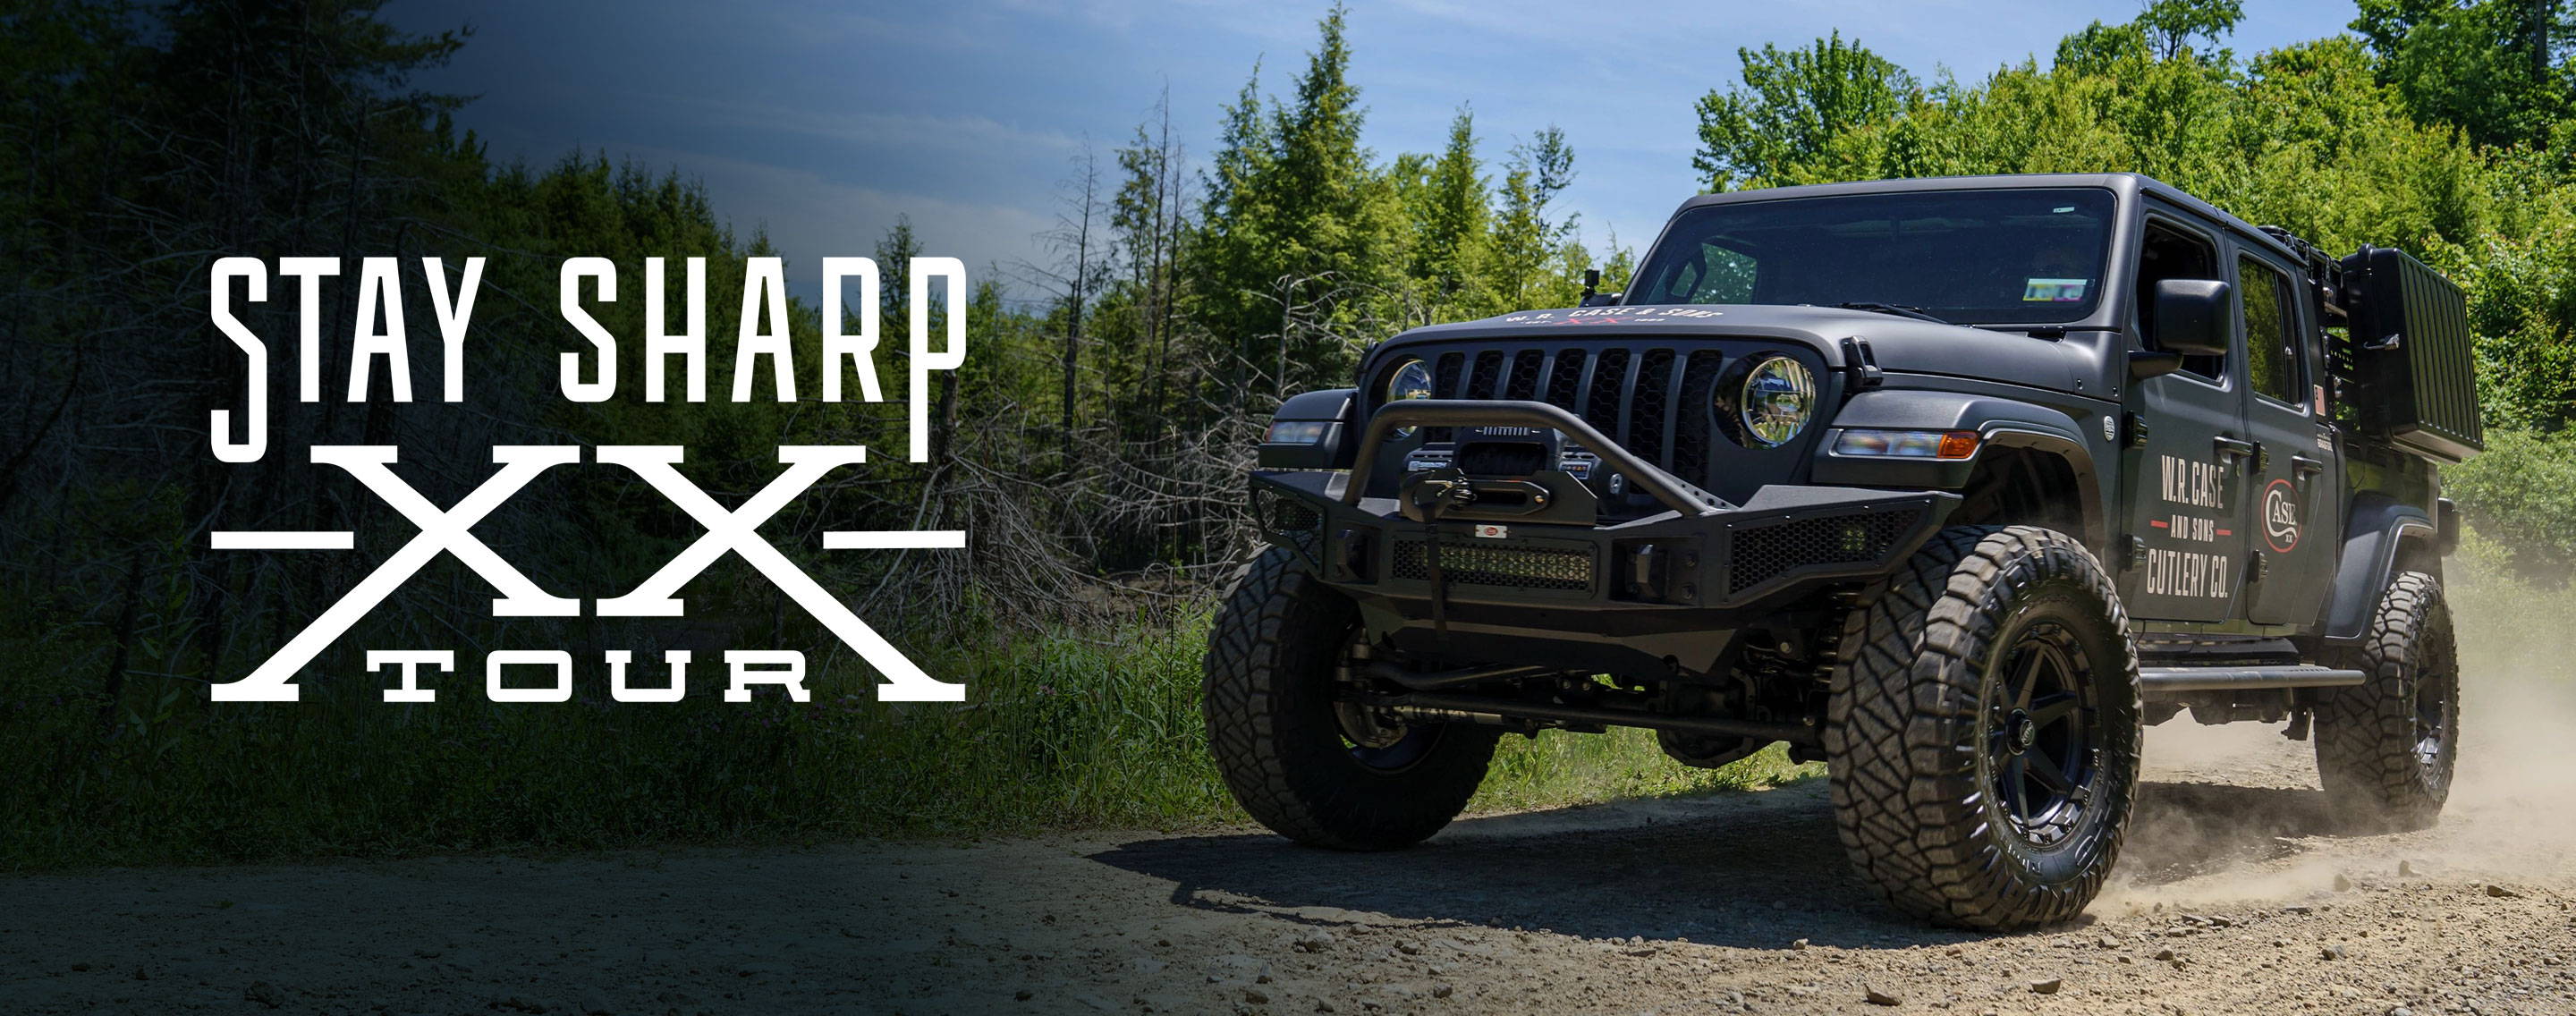 Stay Sharp Tour - Jeep Image.